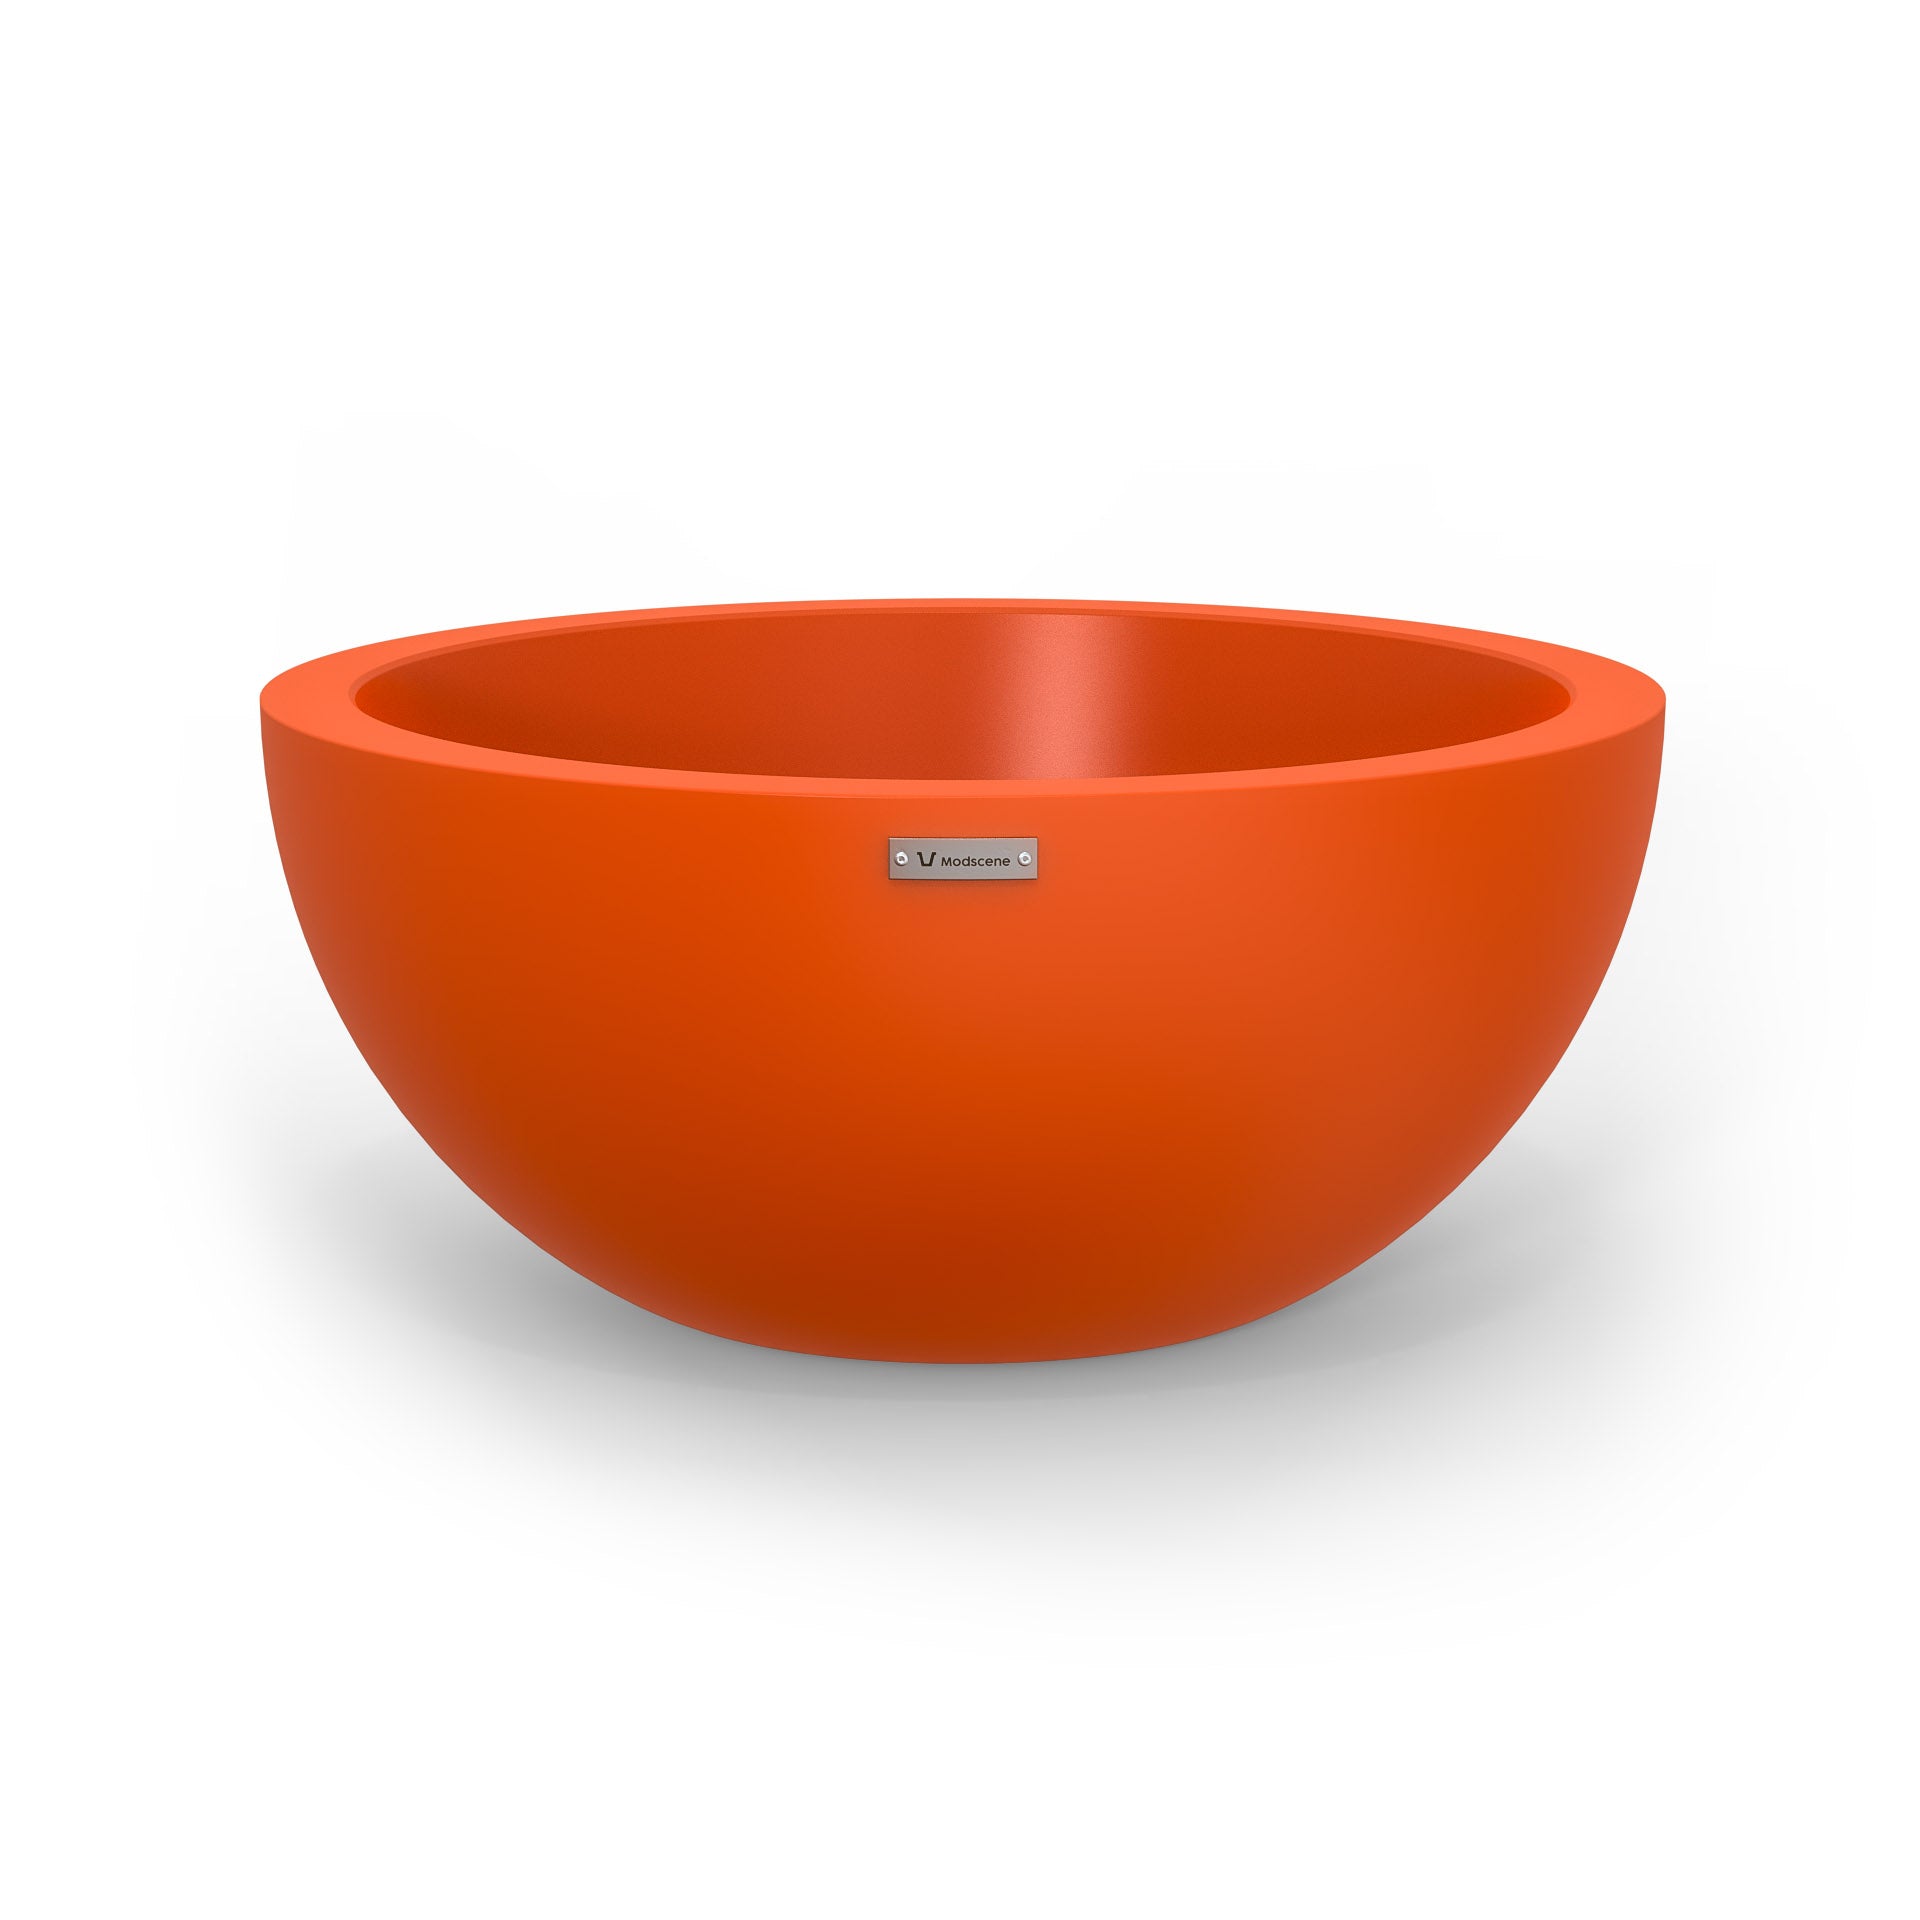 A large planter bowl in orange made by Modscene. Australian planters.